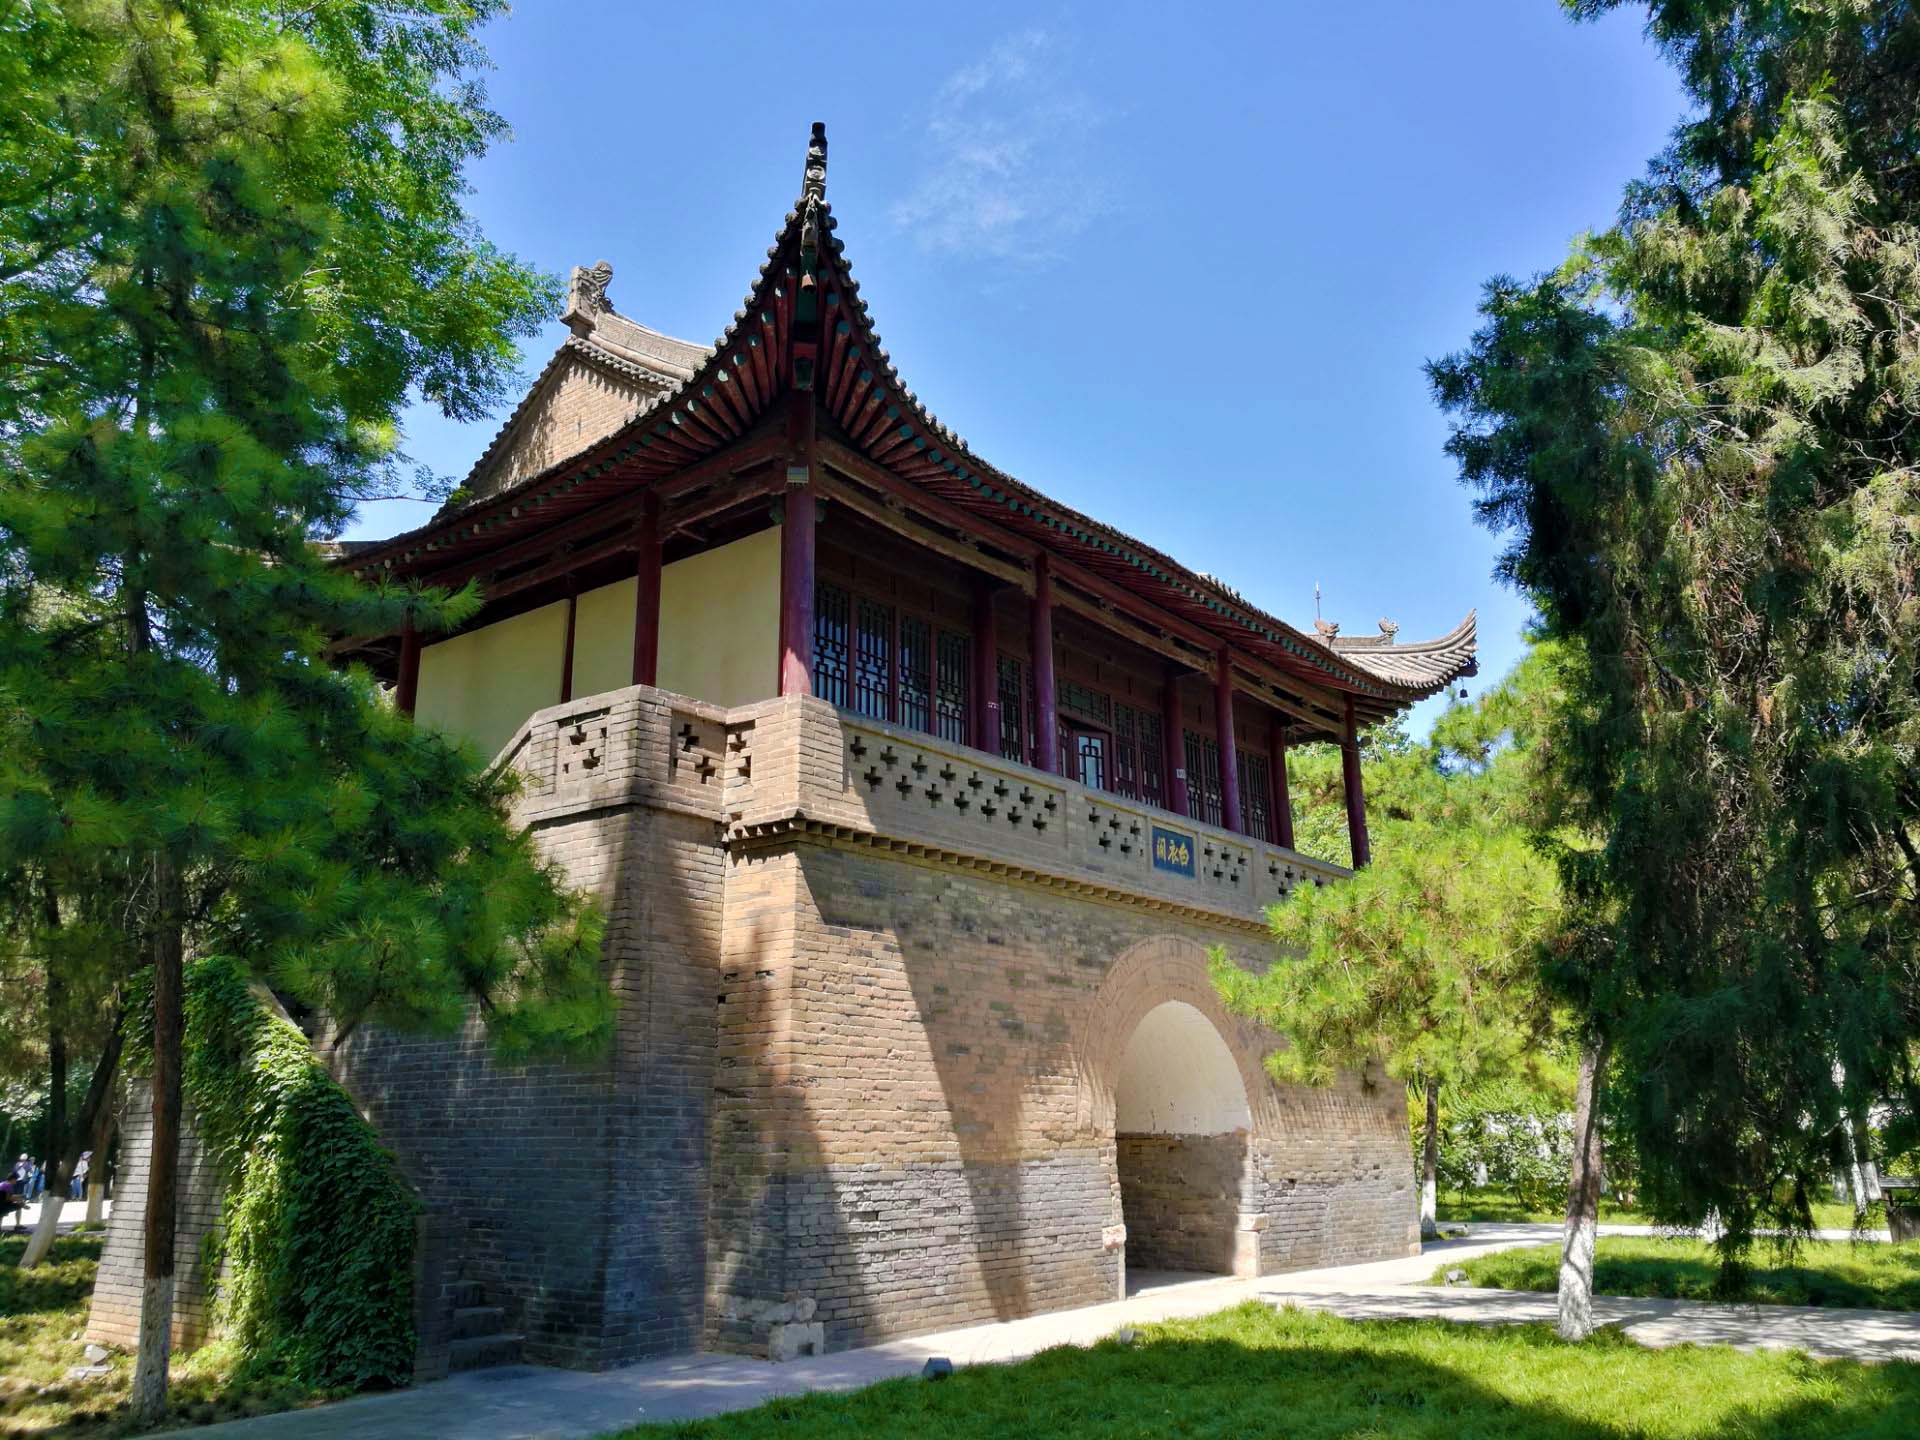 Jianfu Temple